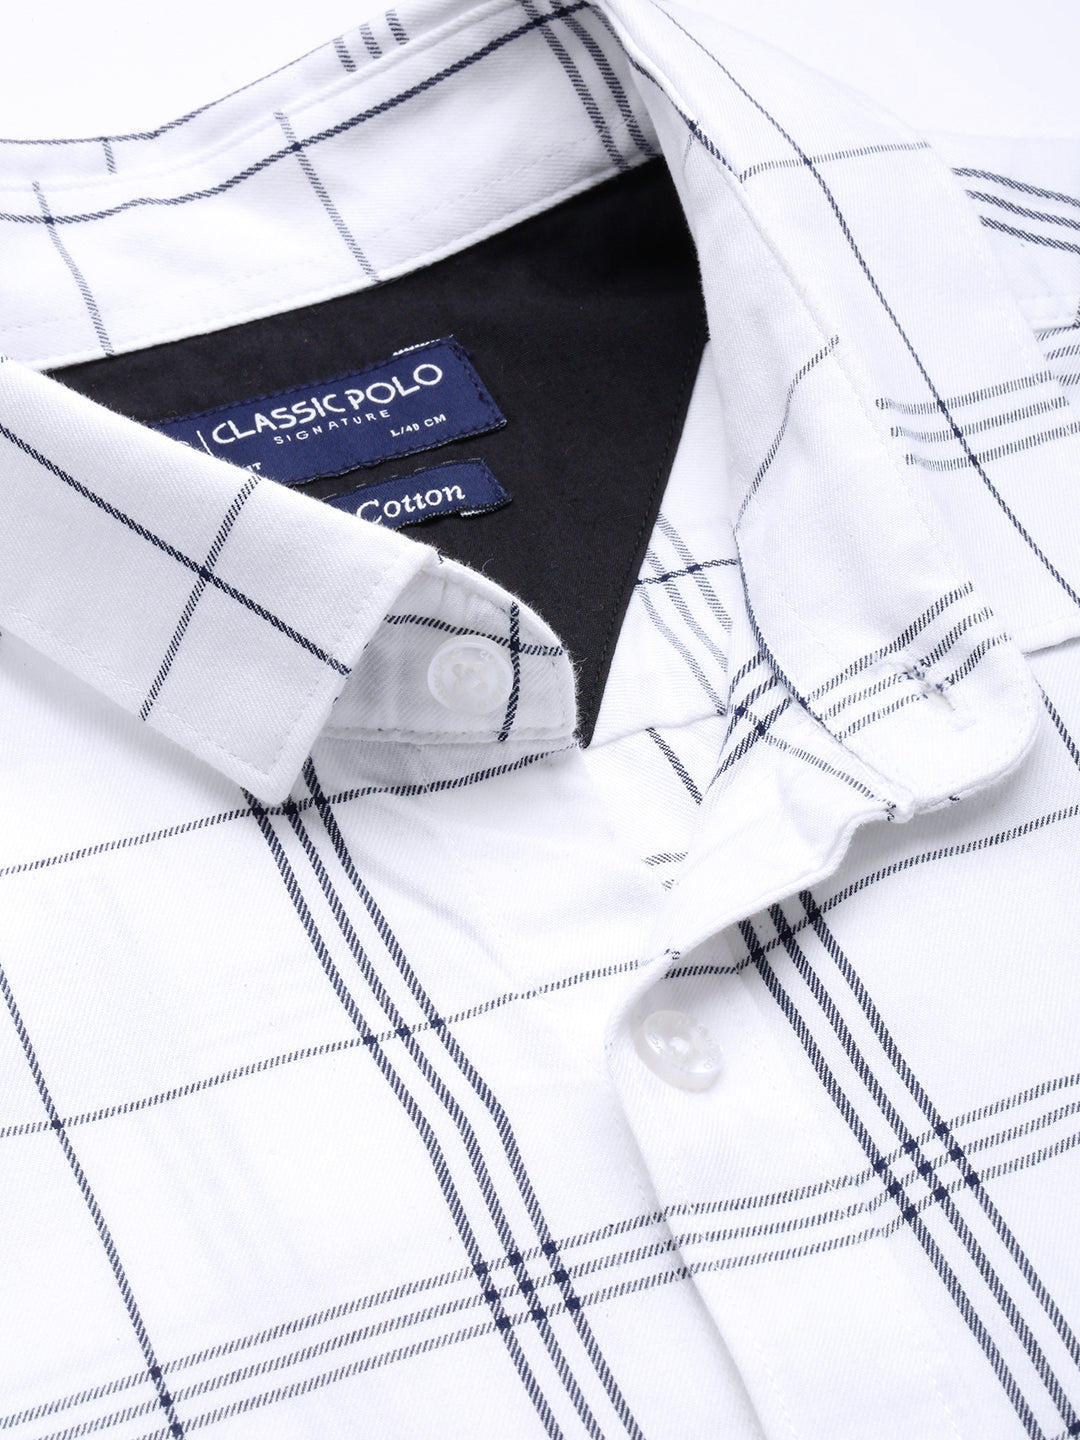 Classic Polo Men's Cotton Half Sleeve Checked Slim Fit Collar Neck White Color Woven Shirt | So1-92 A